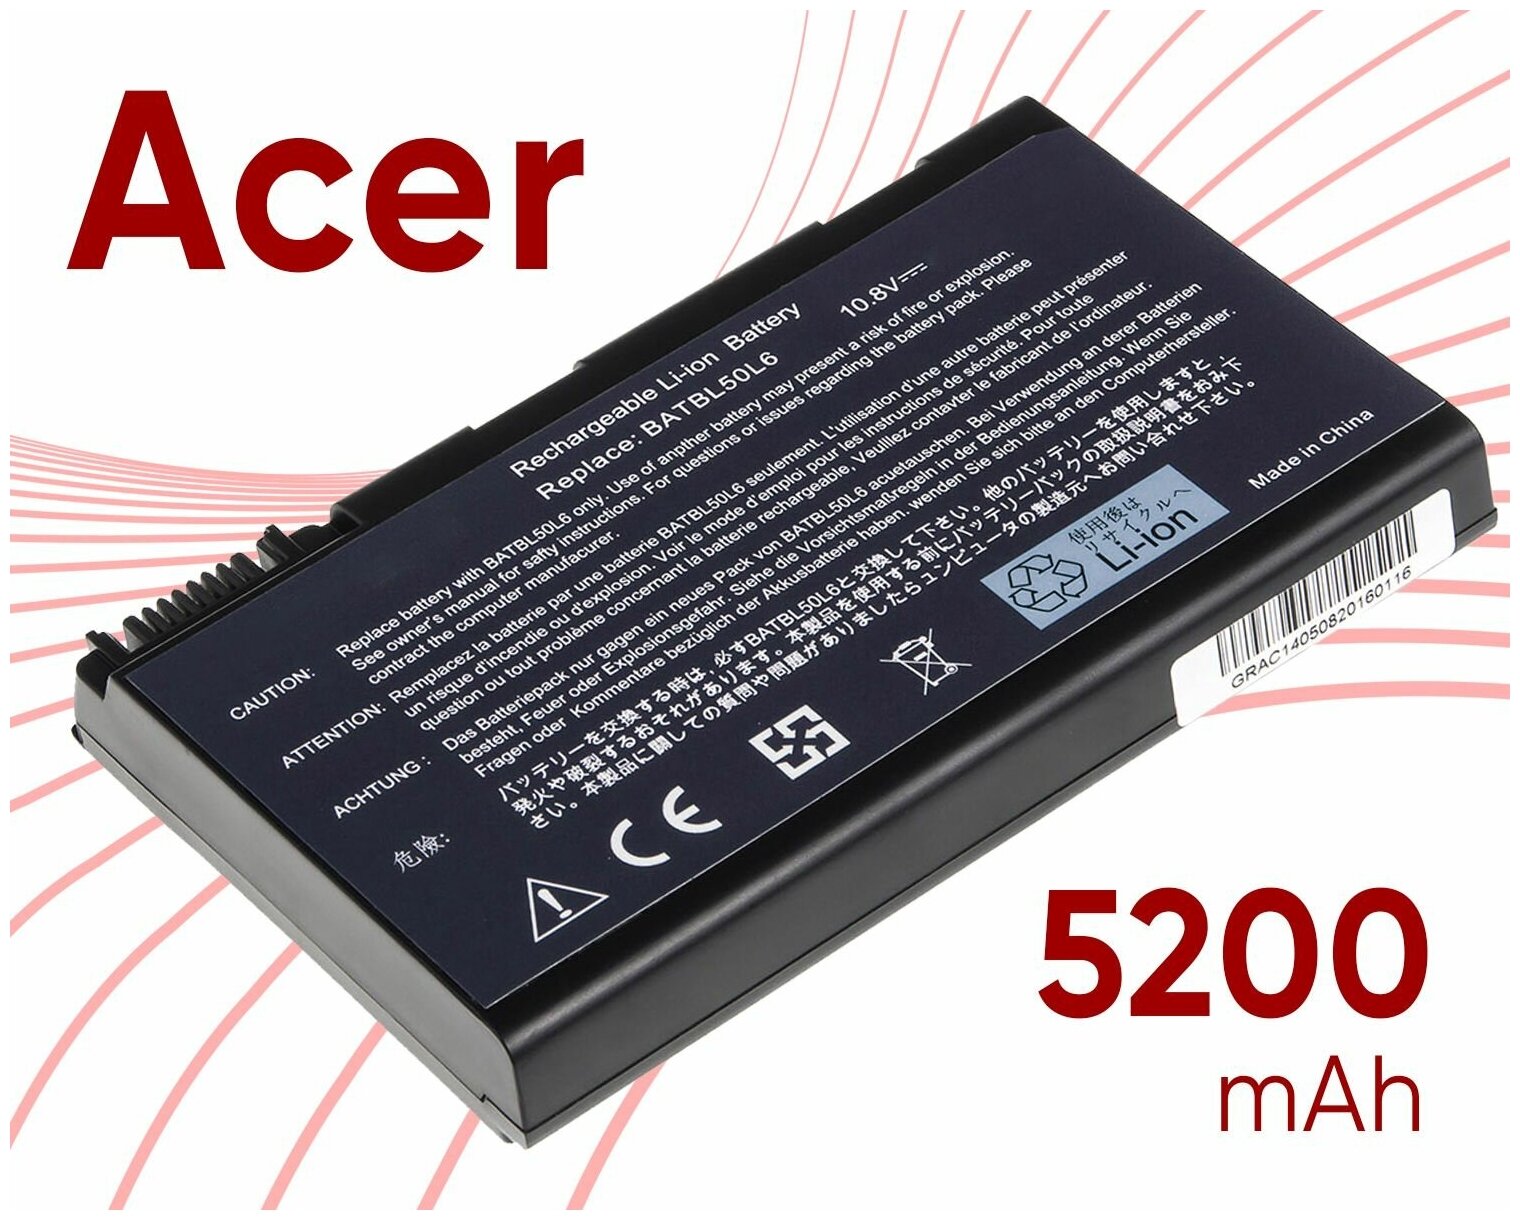 Аккумулятор Acer Aspire BATBL50L6 для Aspire 5100 / Aspire 3690 / Aspire 5110 / Aspire 5630 / Aspire 5610 5680 / TravelMate 2490 4230 4200